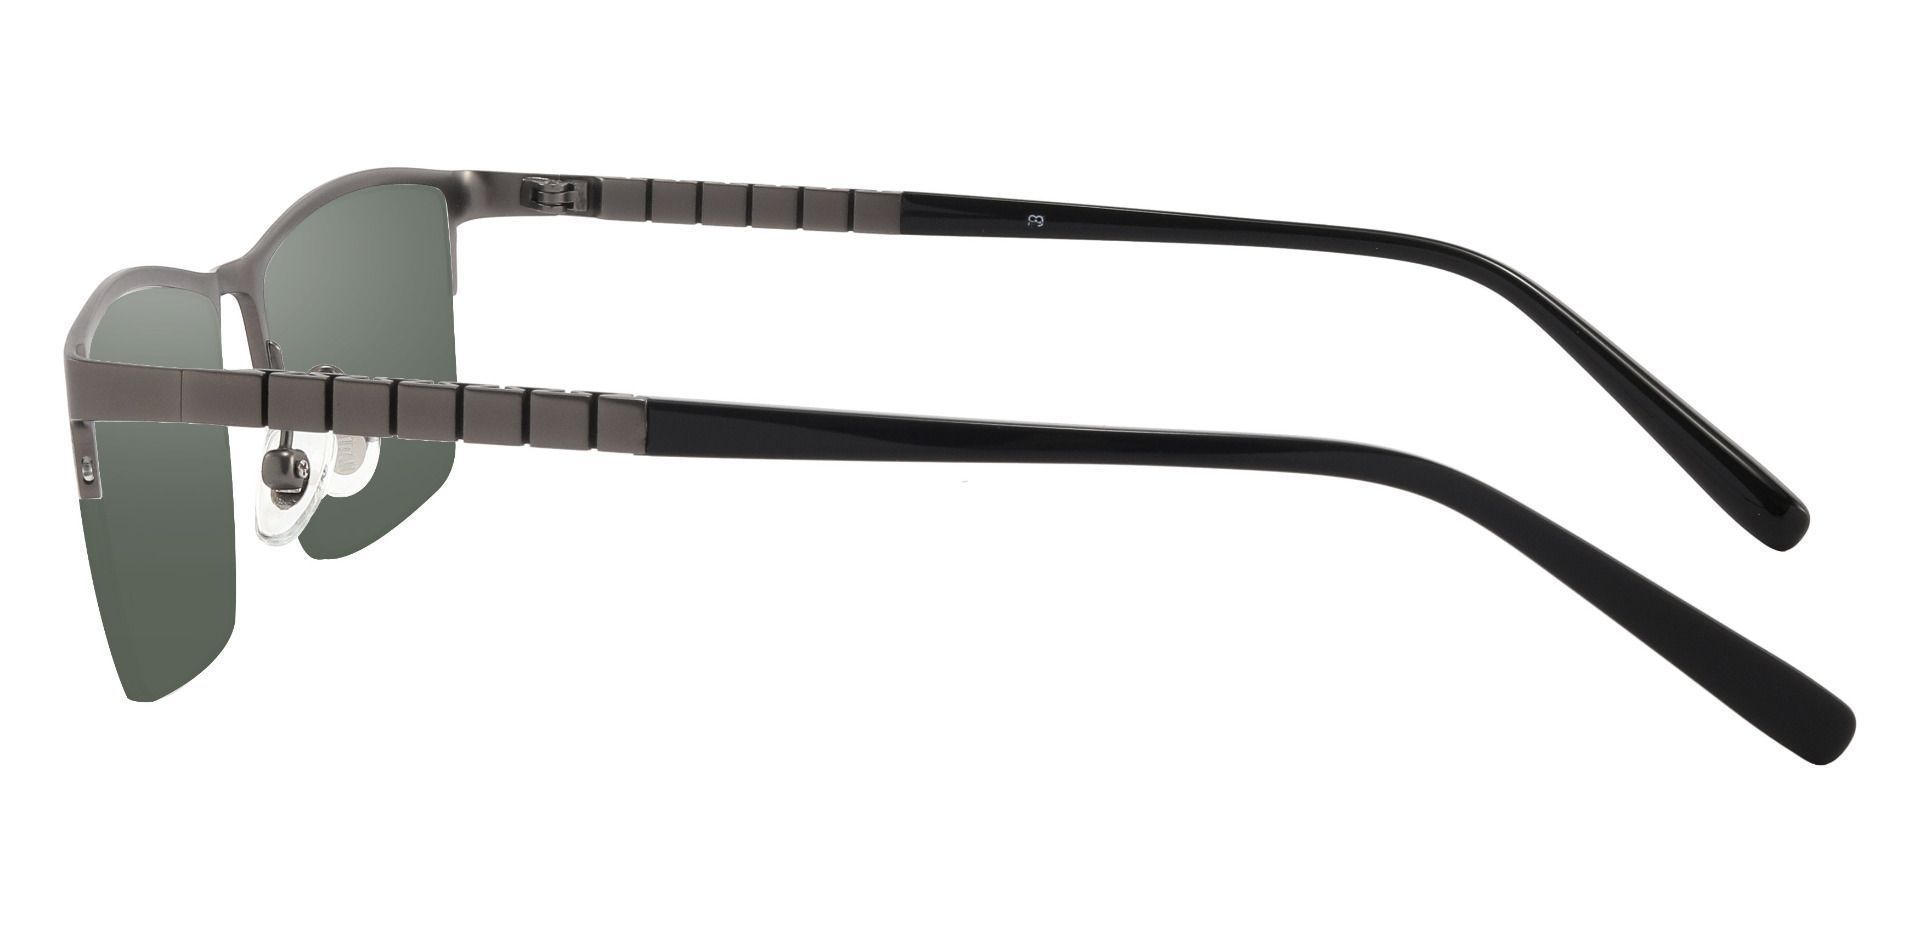 Maine Rectangle Progressive Sunglasses - Gray Frame With Green Lenses